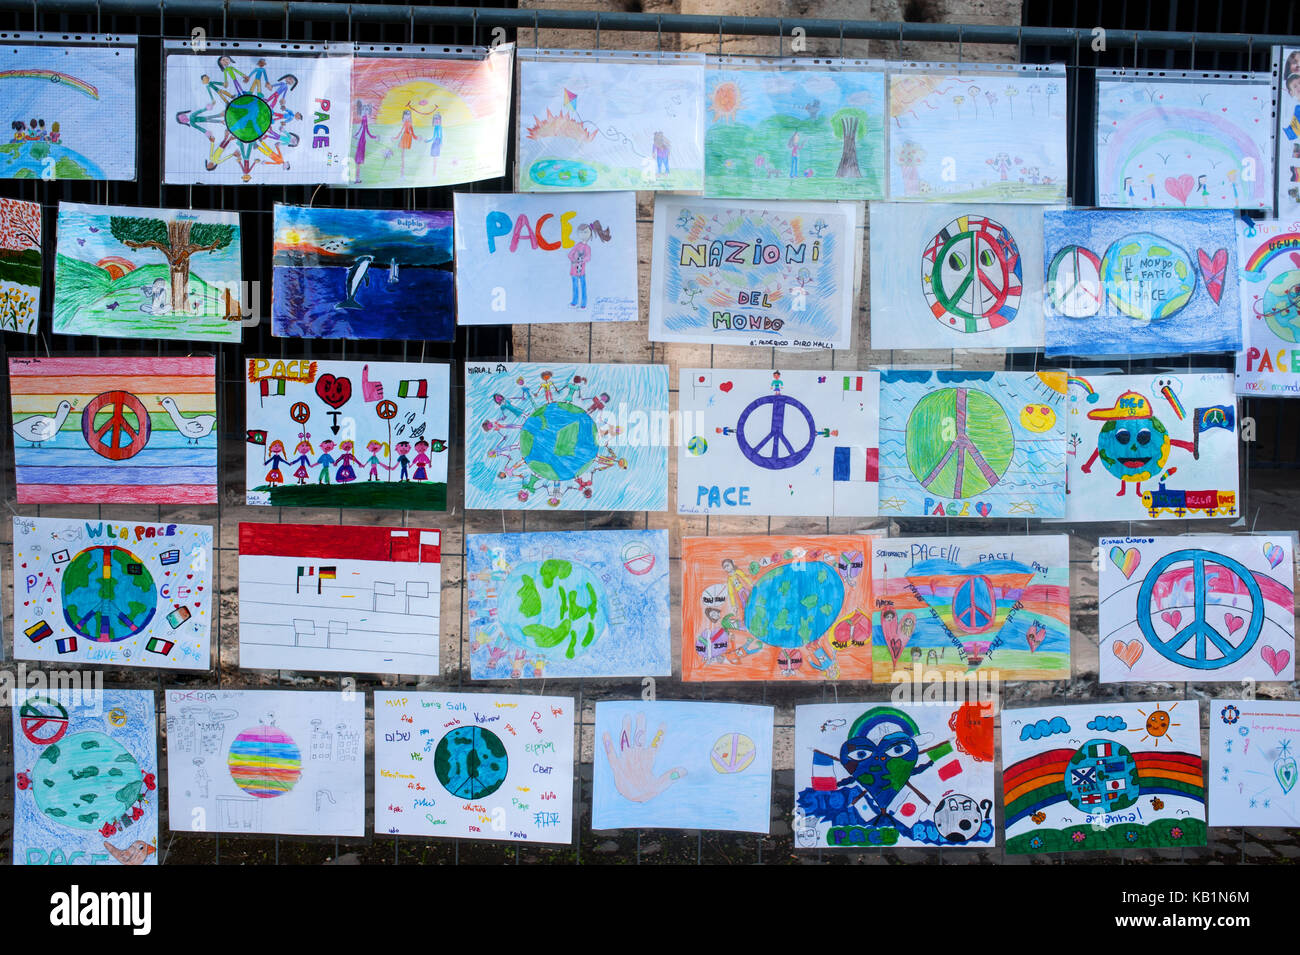 Les enfants de la paix dessin Banque D'Images